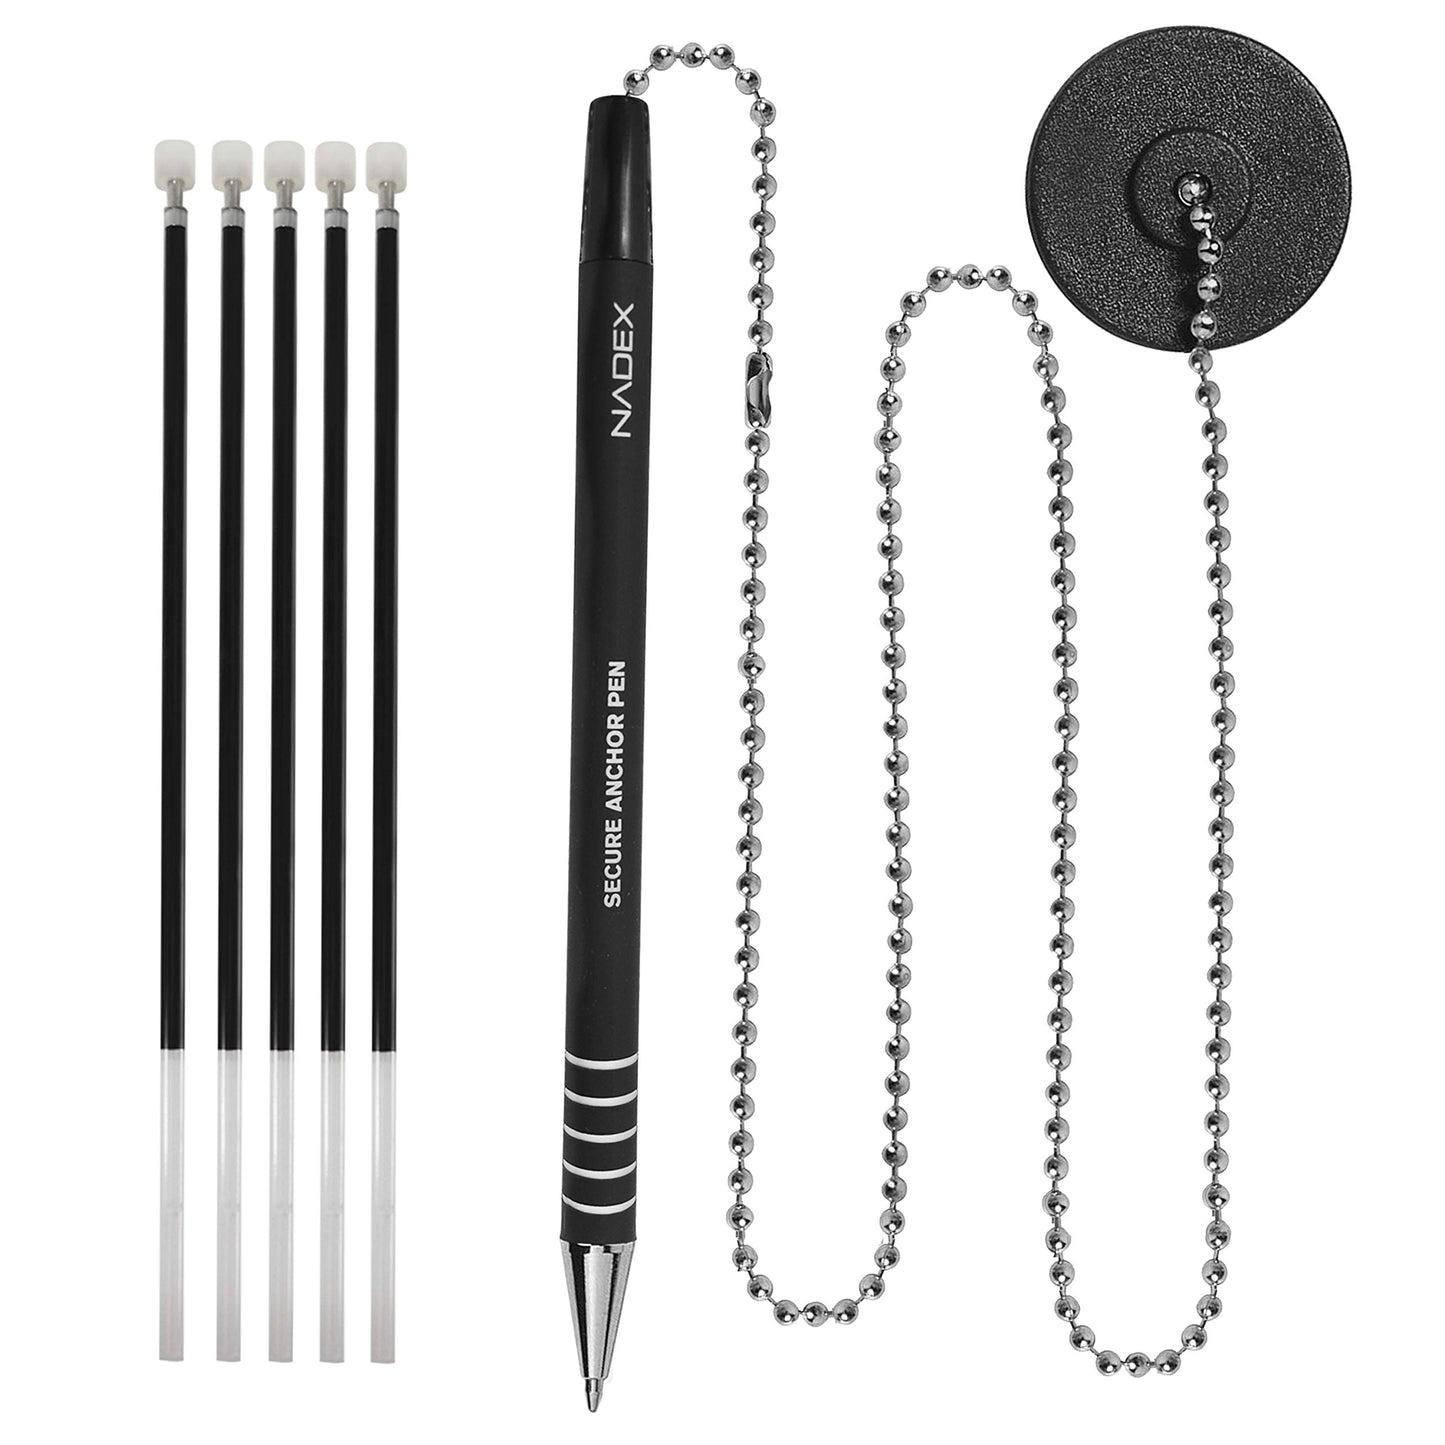 Security Chain Security Pen, 8 pens, 2 mounts, 10 refills, black